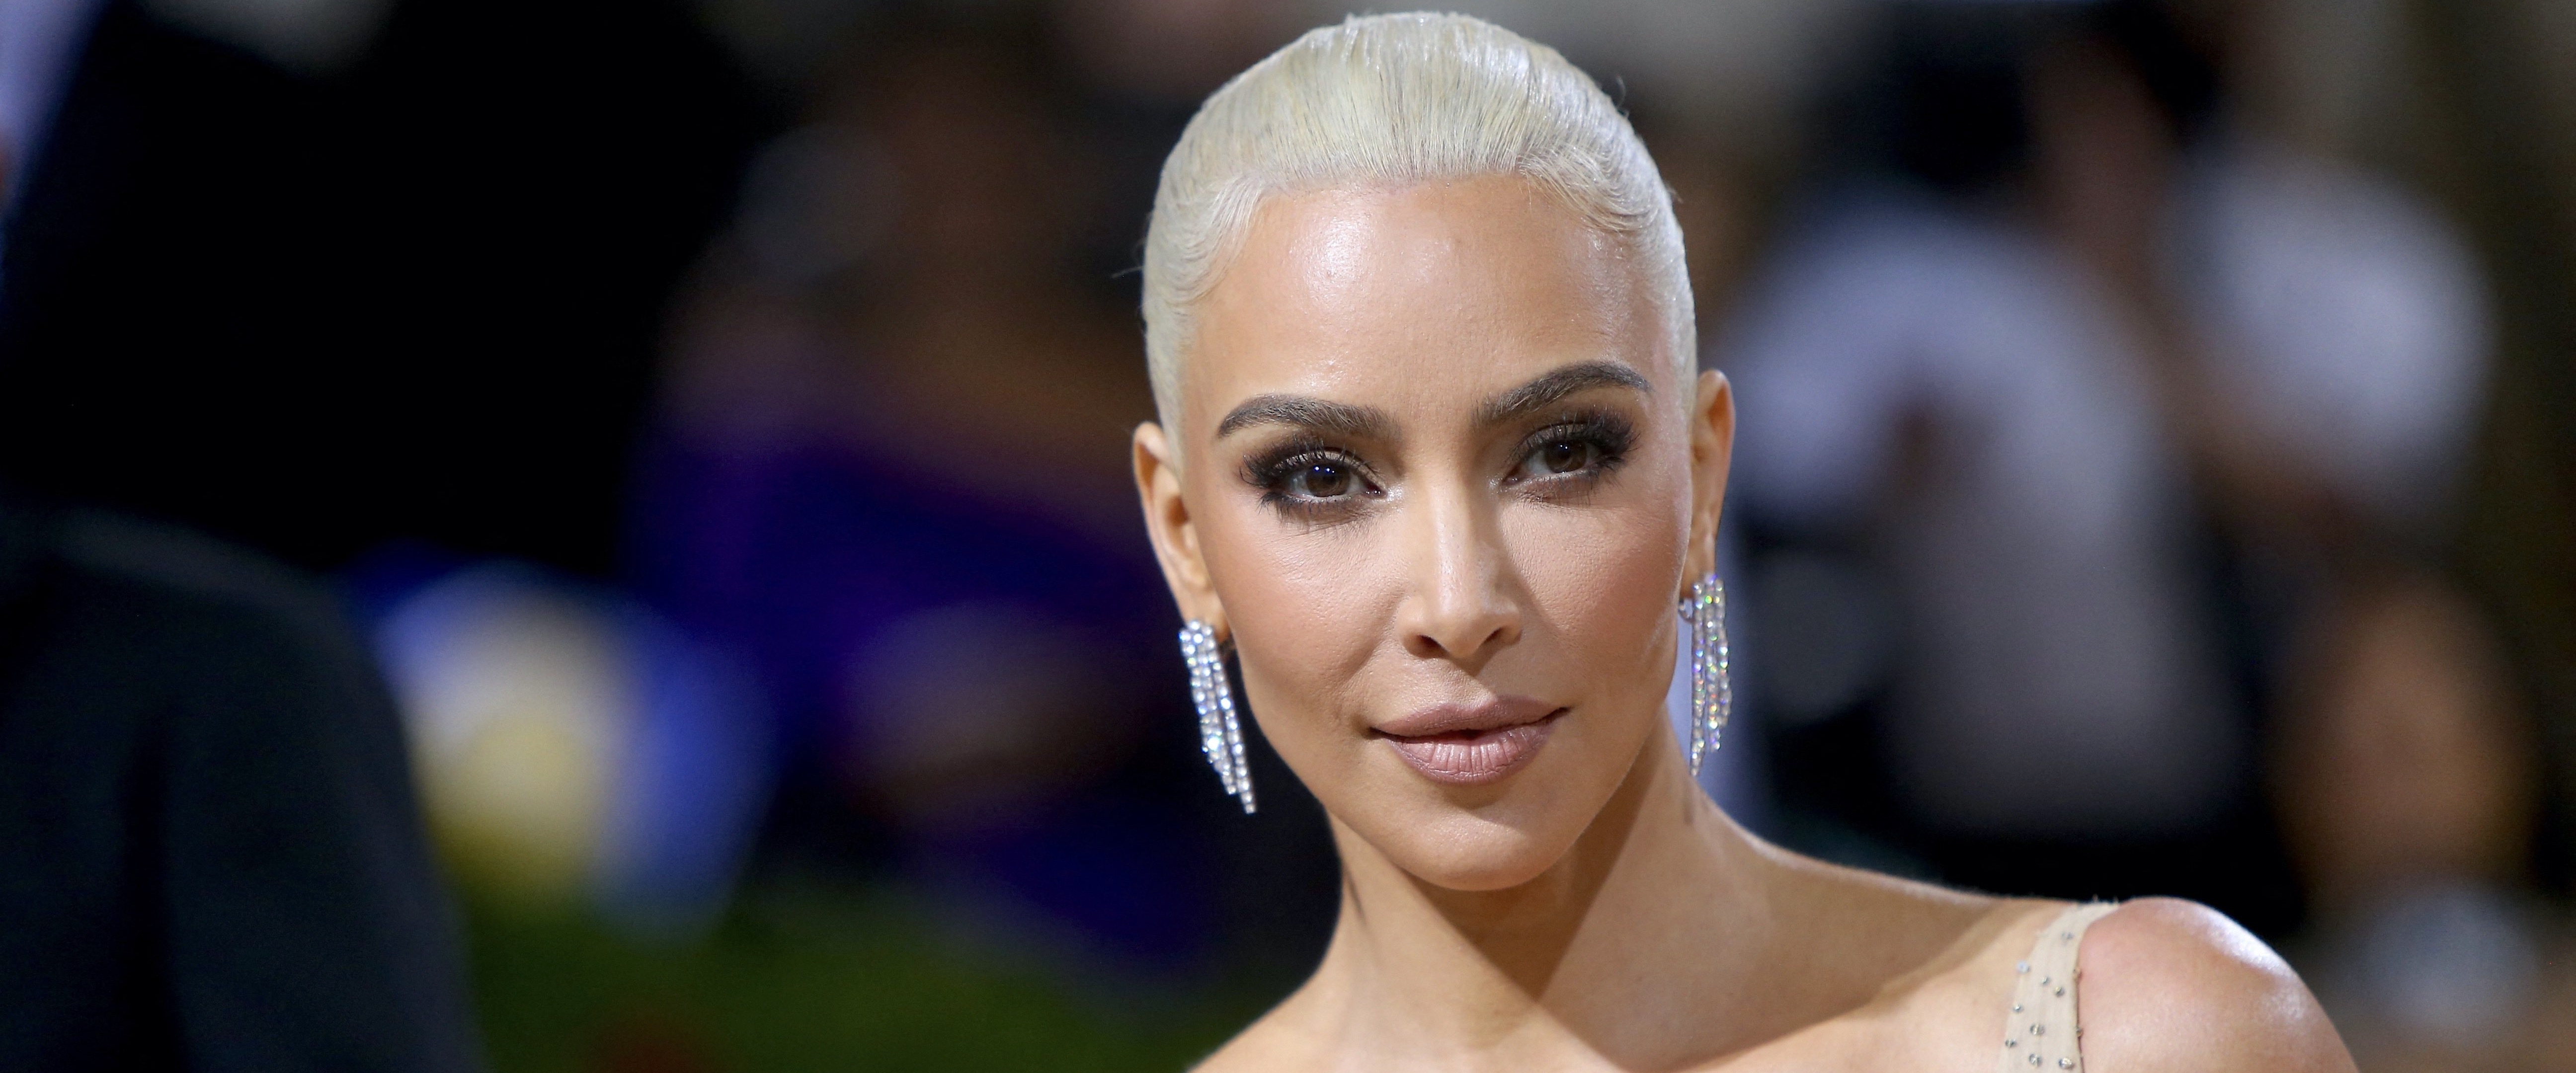 Kruisje gezet: Kim Kardashian kocht dit juweel van prinses Diana